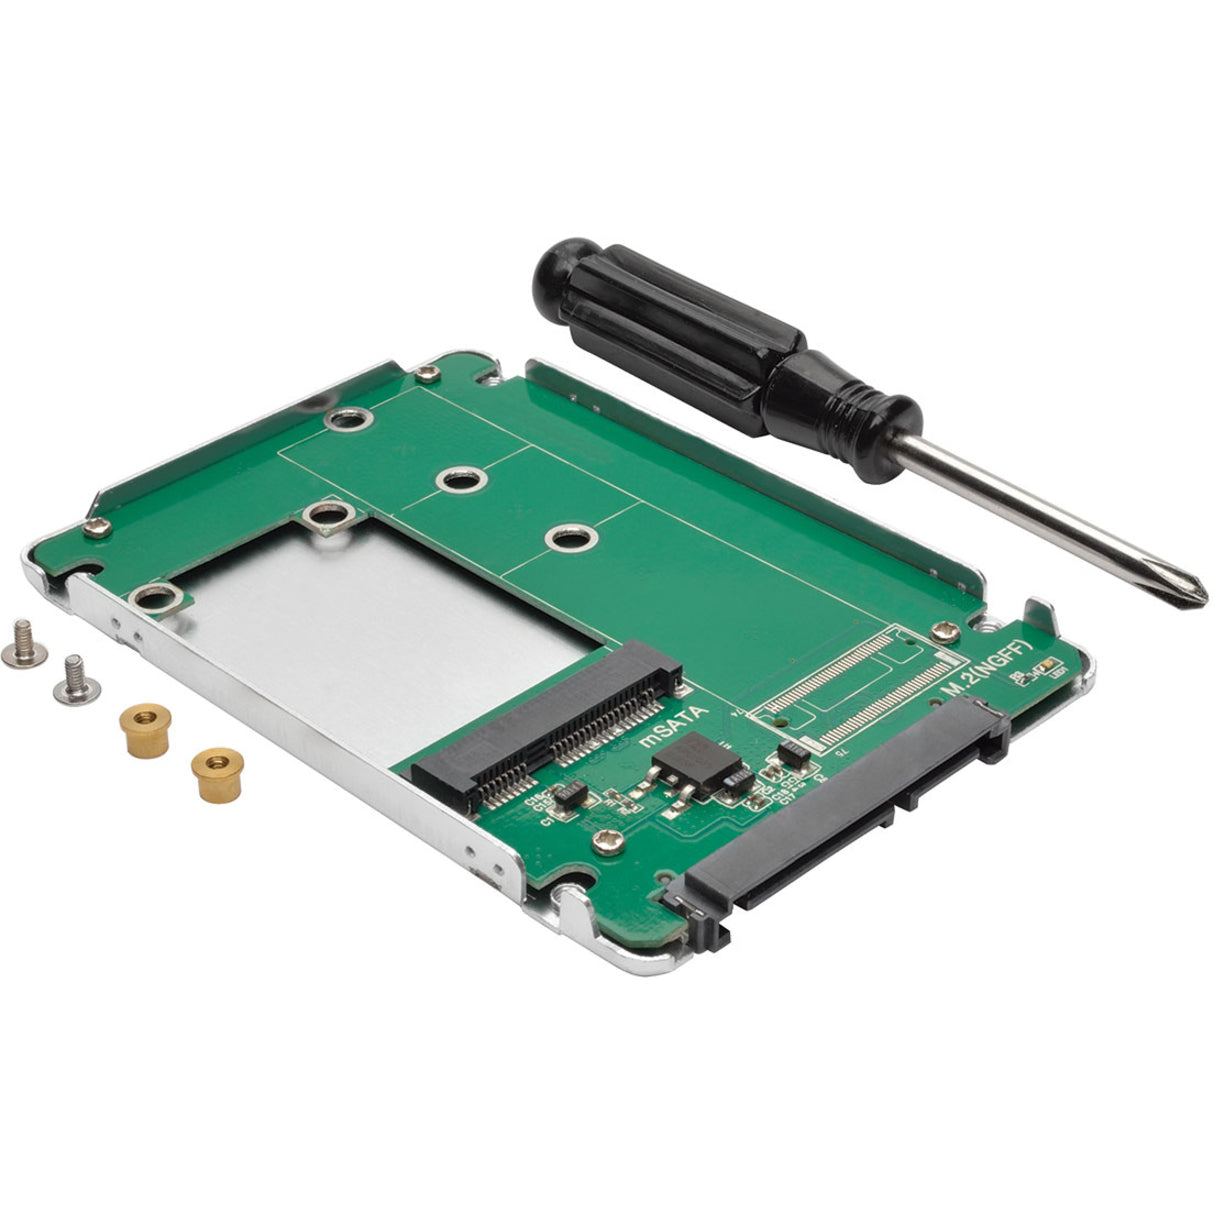 Tripp Lite P960-001-MSATA mSATA SSD to 2.5 in. SATA Enclosure Adapter Converter, Limited Warranty, China, RoHS